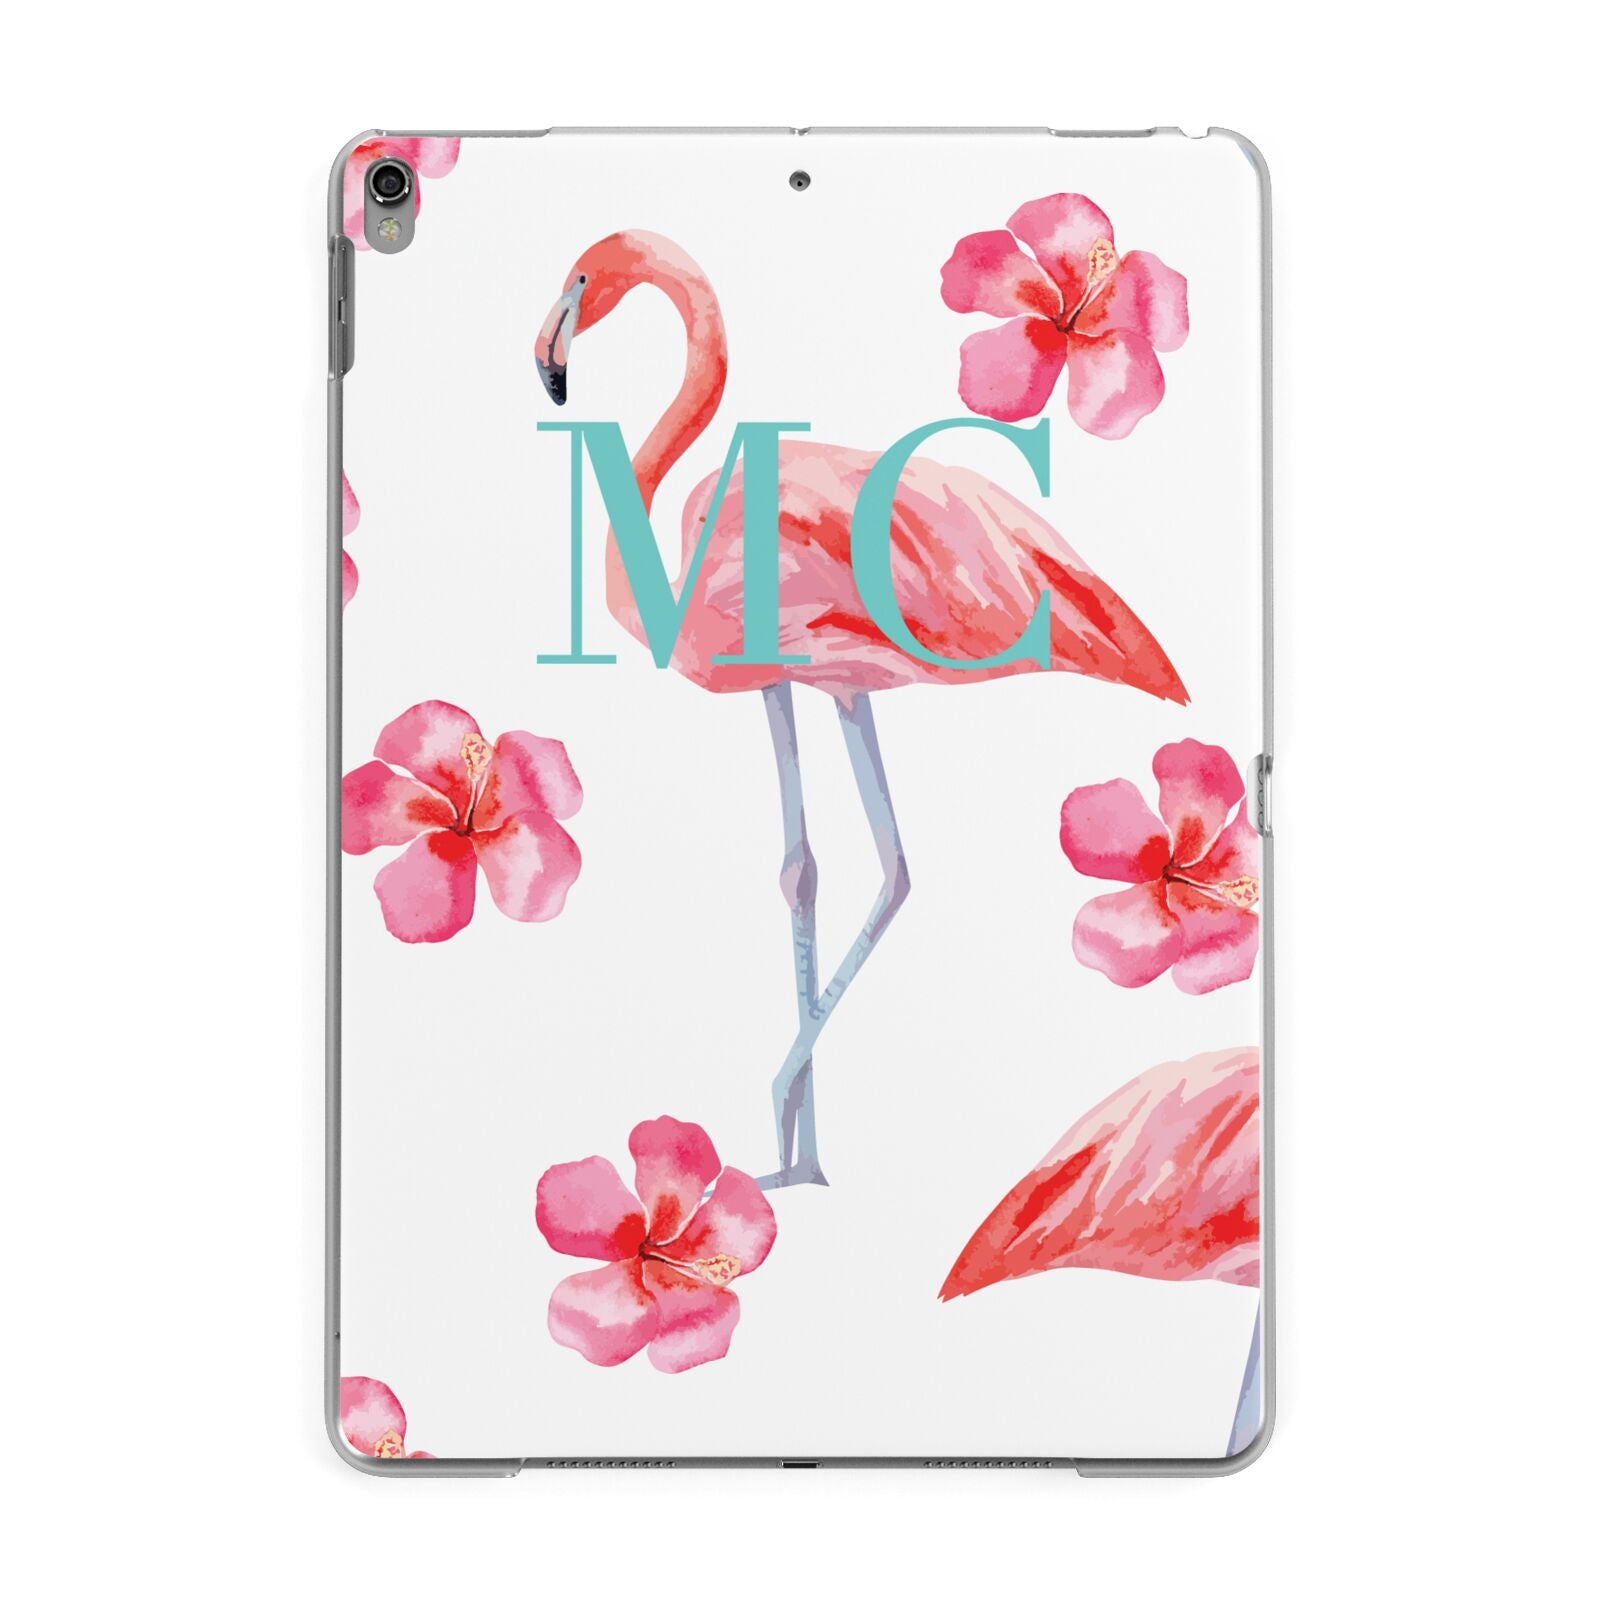 Personalised Initials Flamingo 3 Apple iPad Grey Case